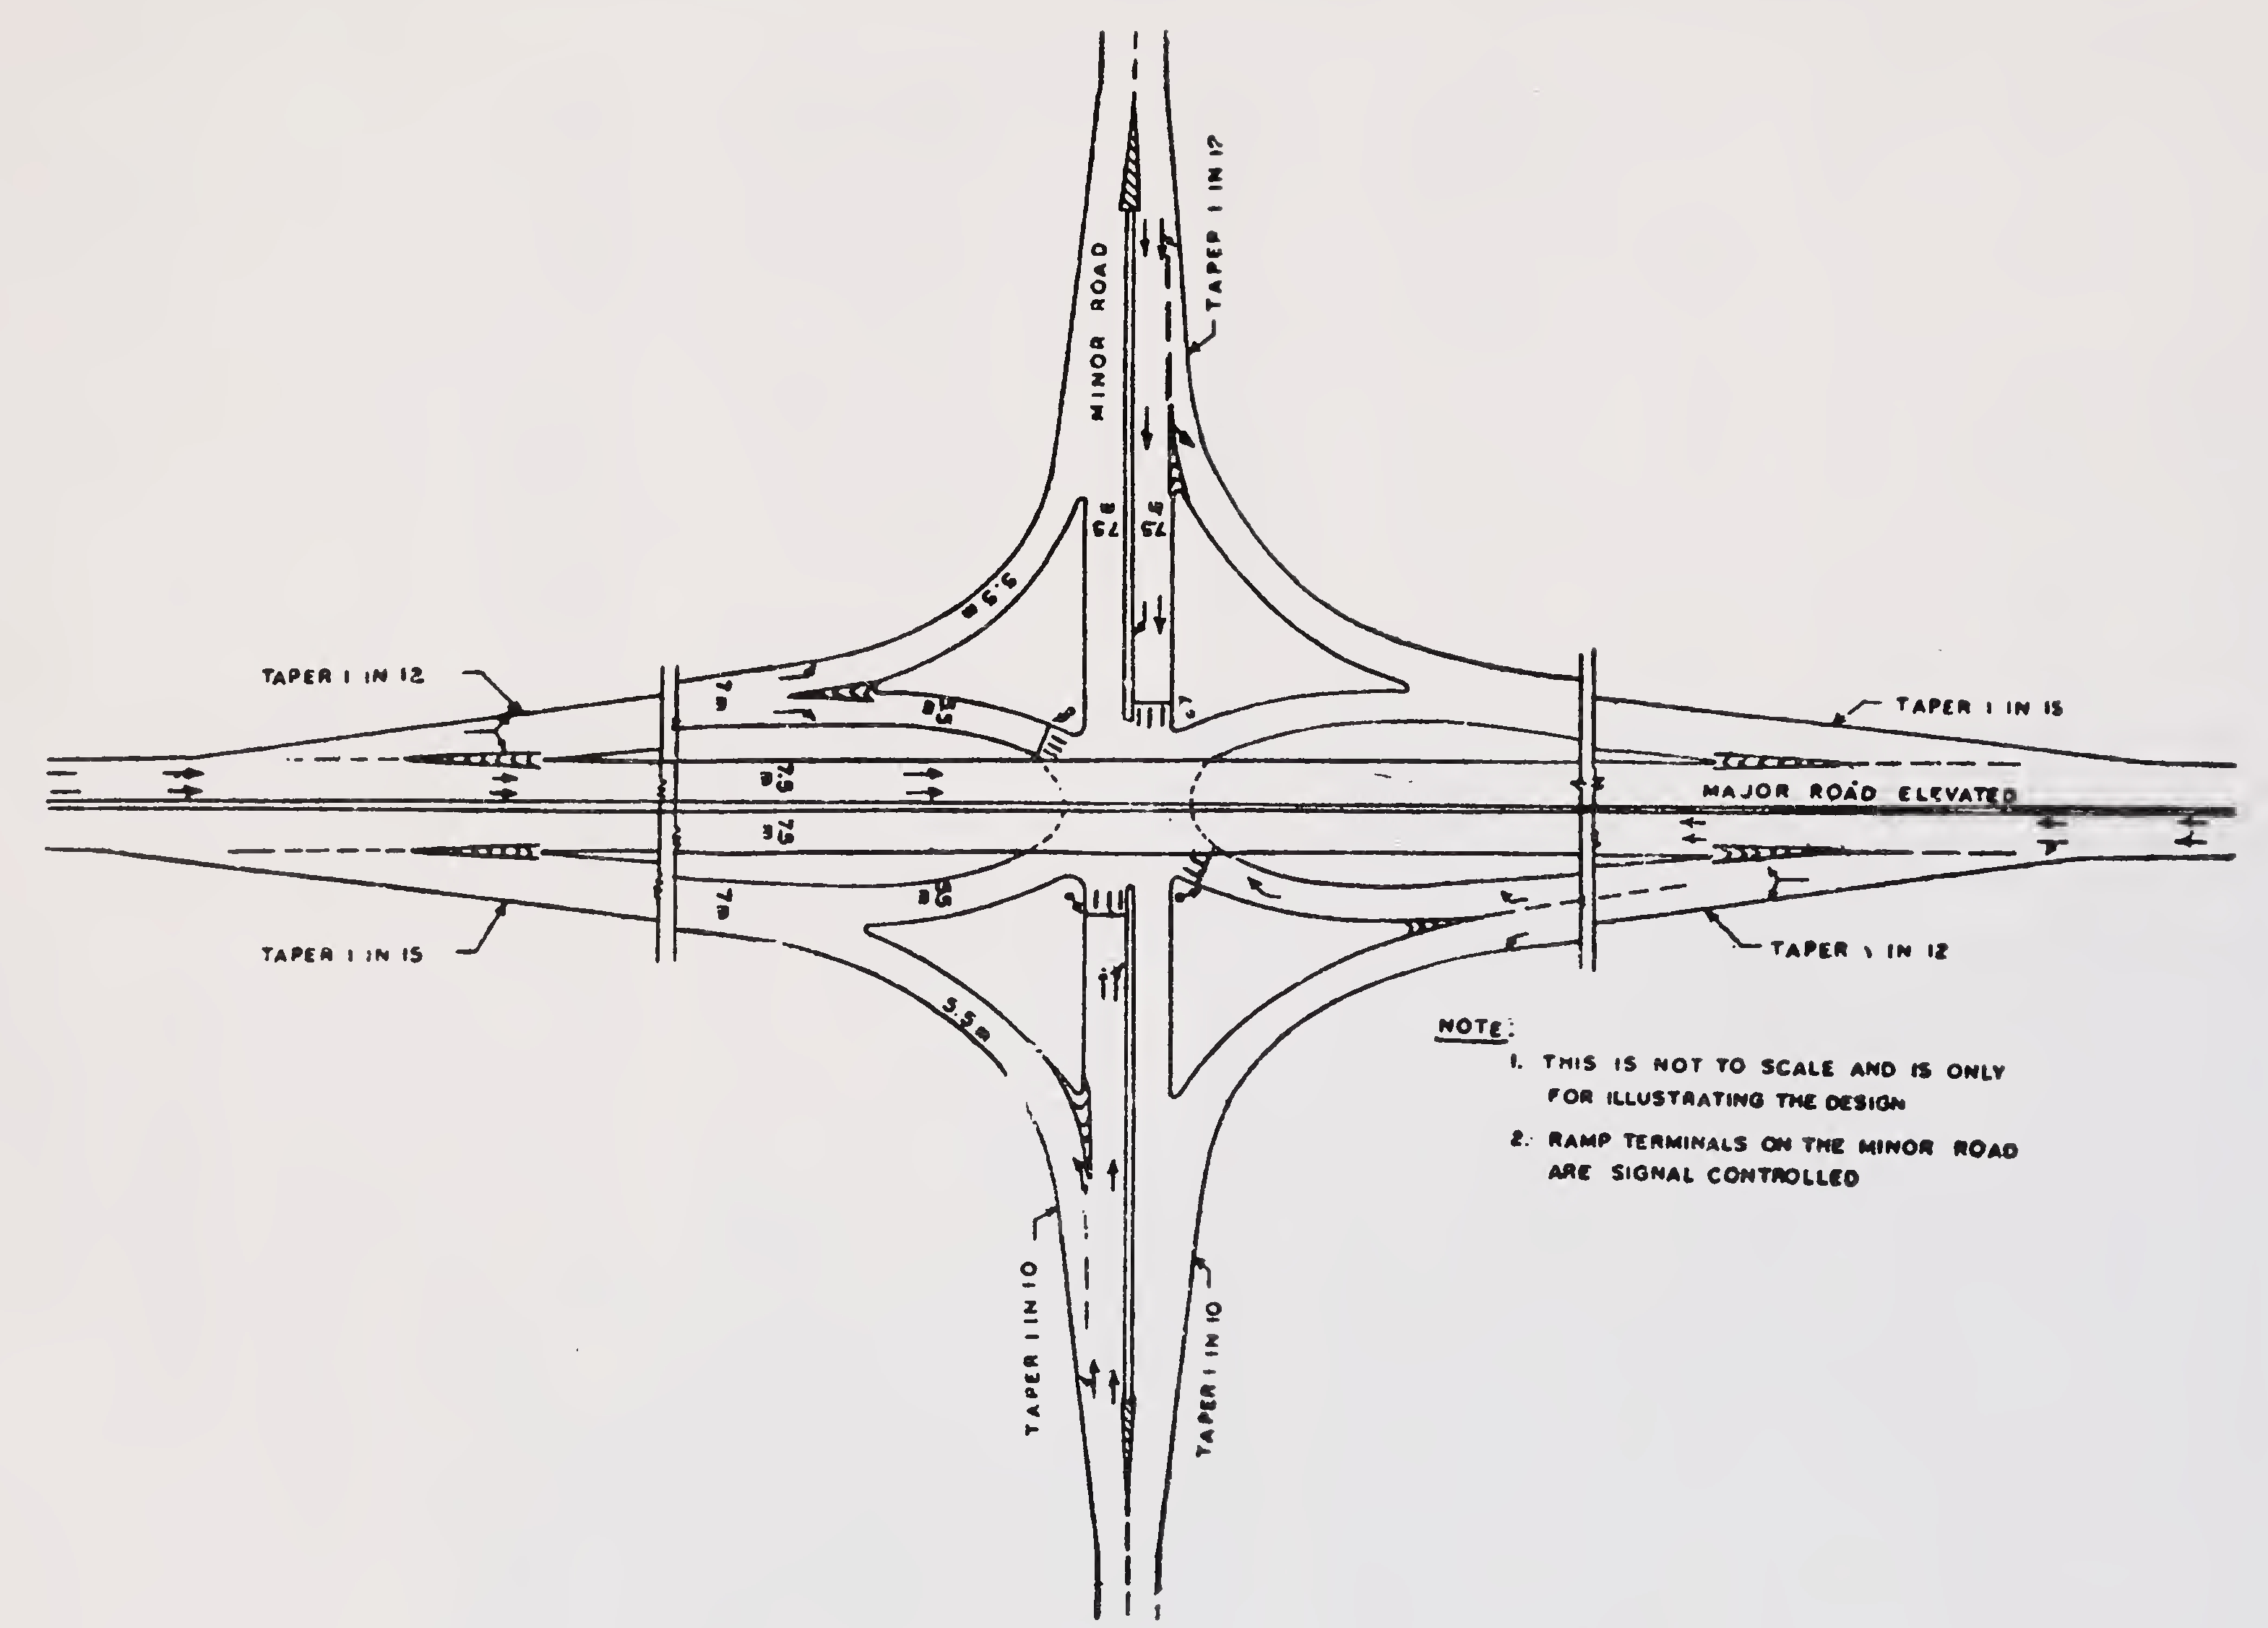 Fig. 5. Typical 4-leg interchange in urban area